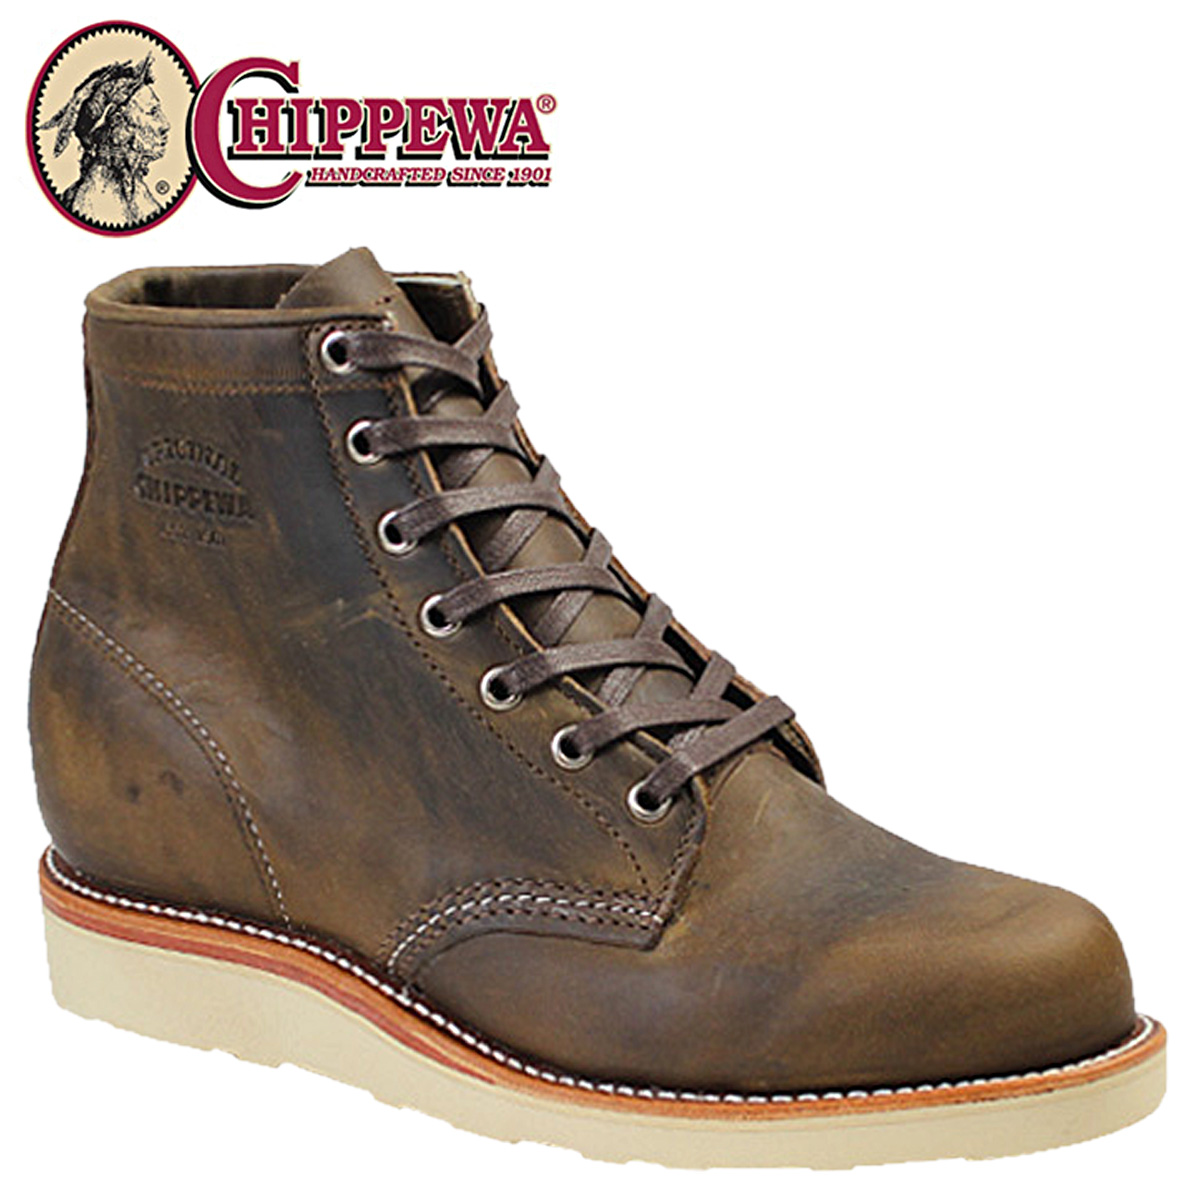 chippewa wedge sole boots